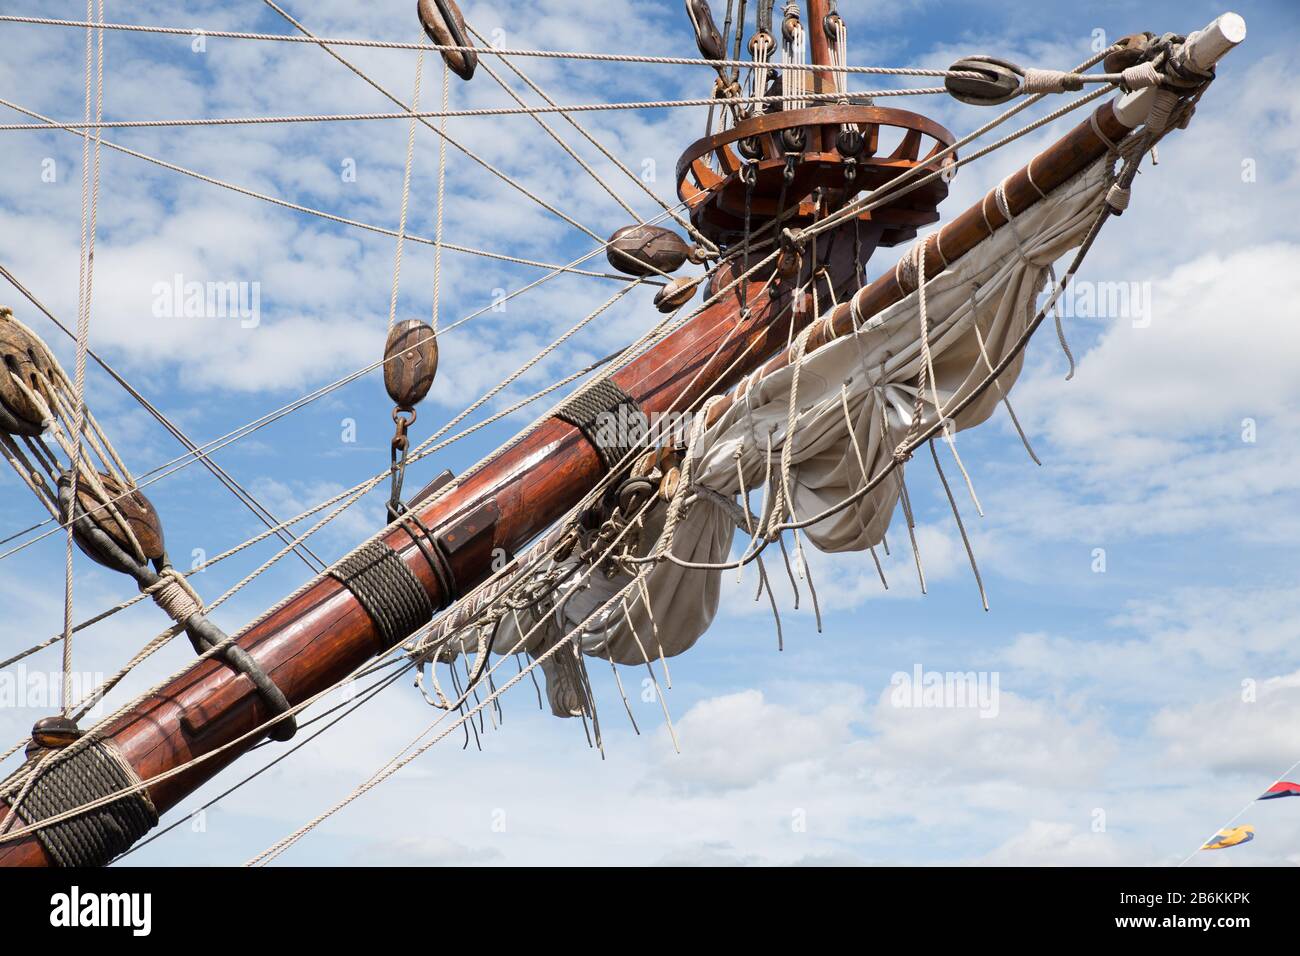 Foremast and Sail of Old Sailing Ship Stock Photo